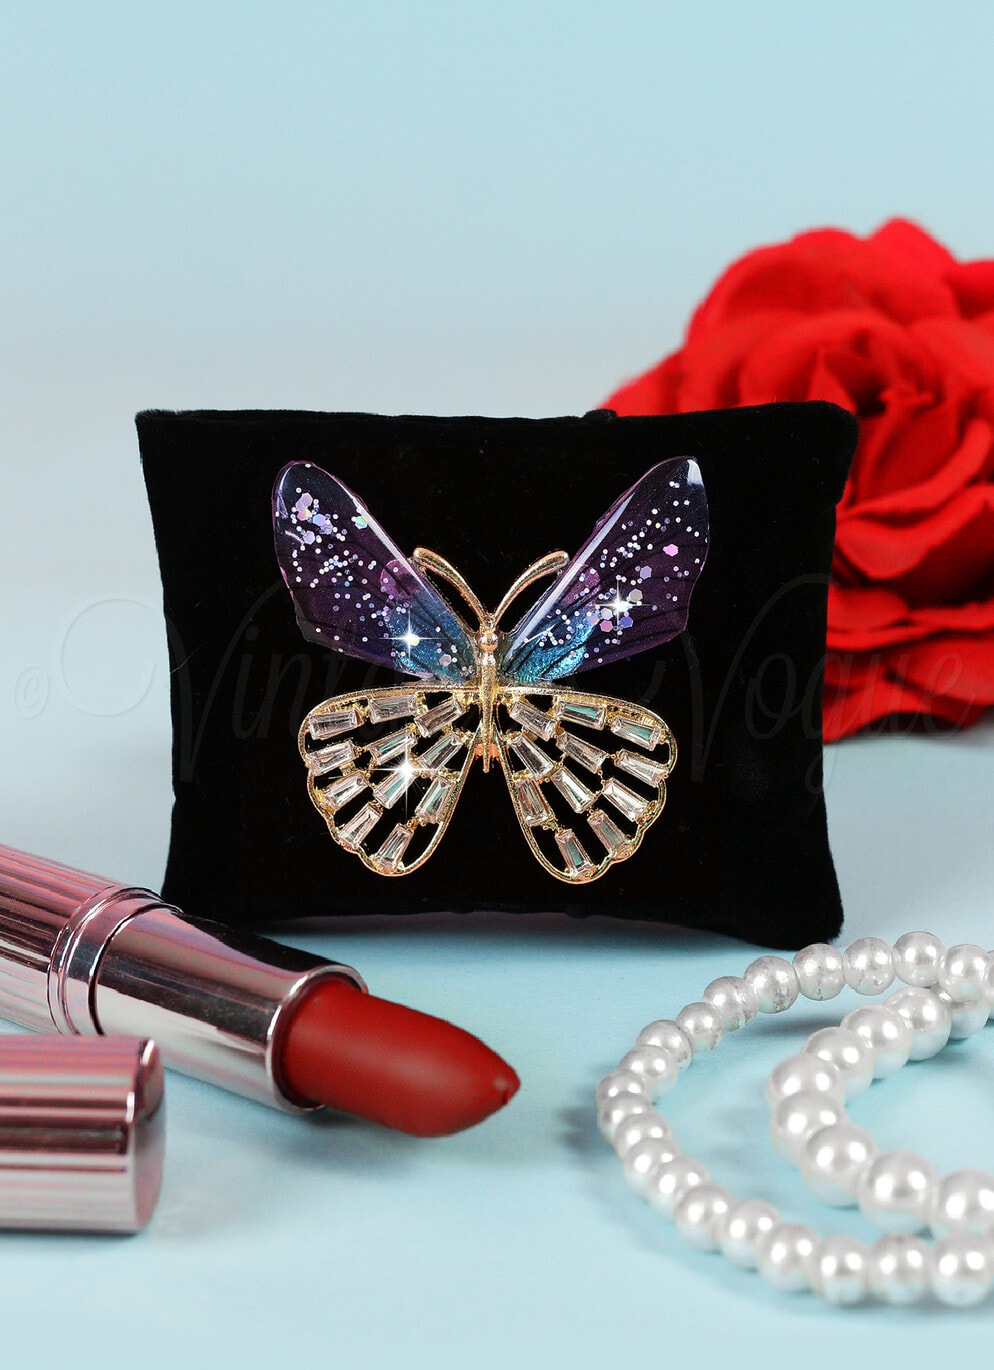 Oh so Retro! Vintage Schmetterling Brosche Butterfly Transparent Brooch in Blau & Lila